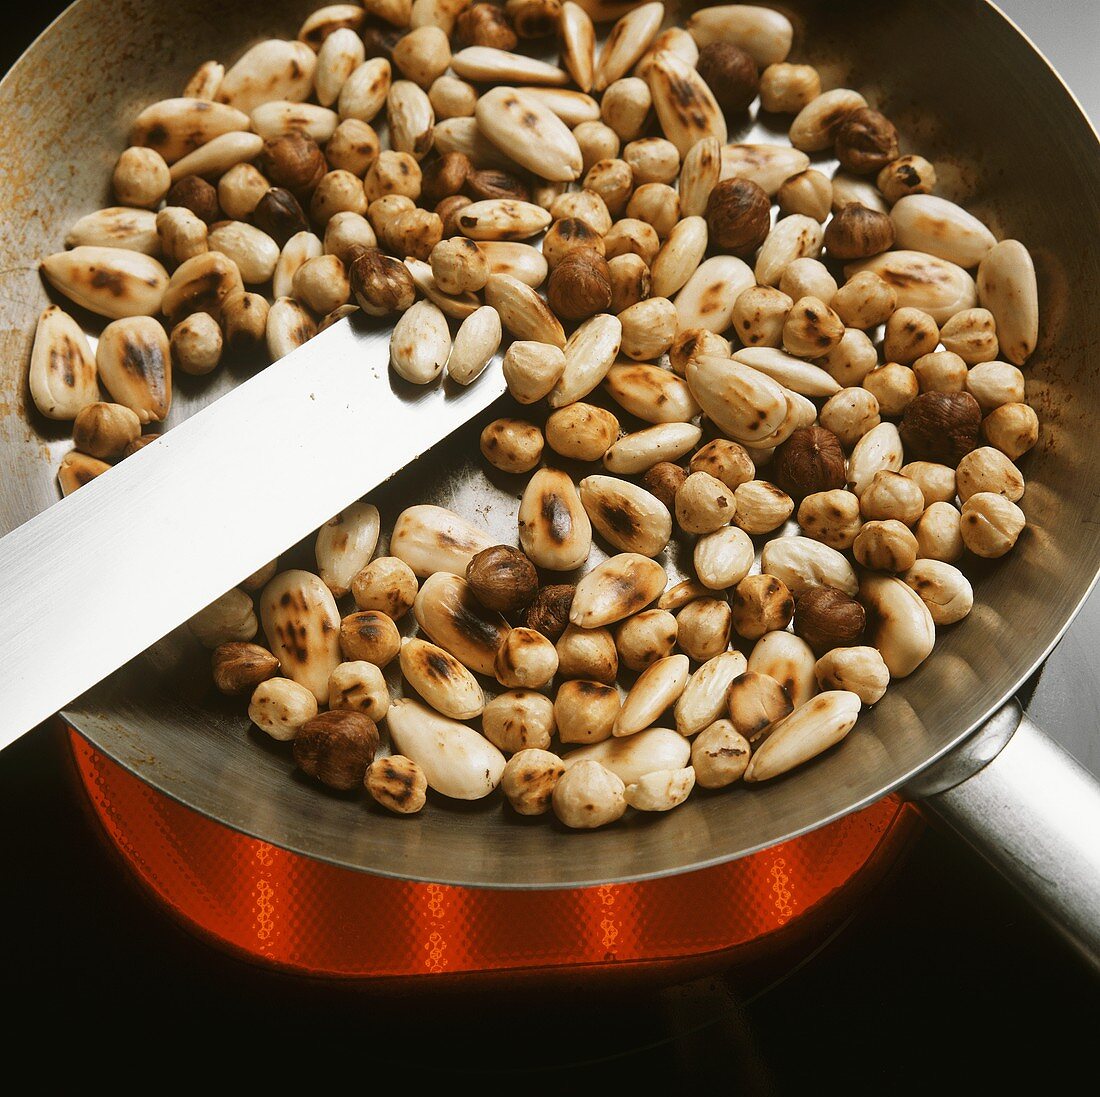 Toasting almonds and hazelnuts